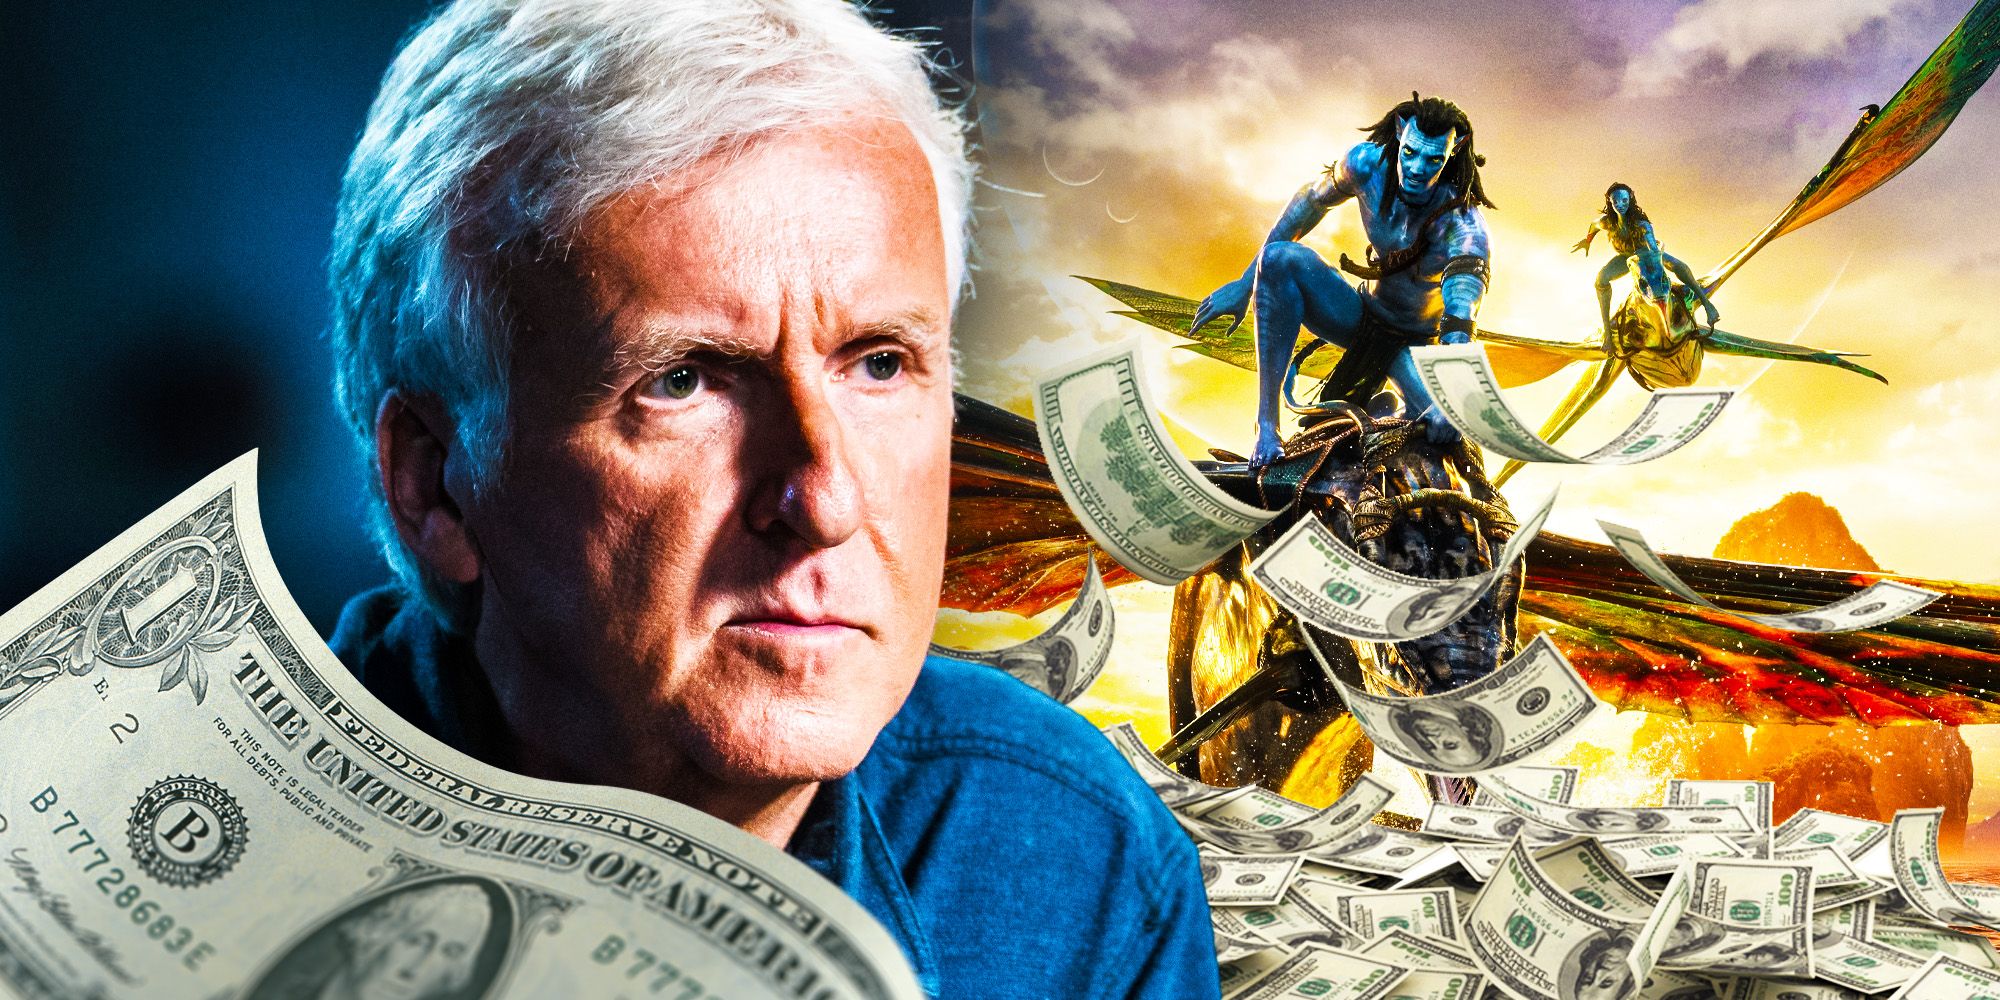 James Cameron Defends Avatar Sequels 3Hour Runtime